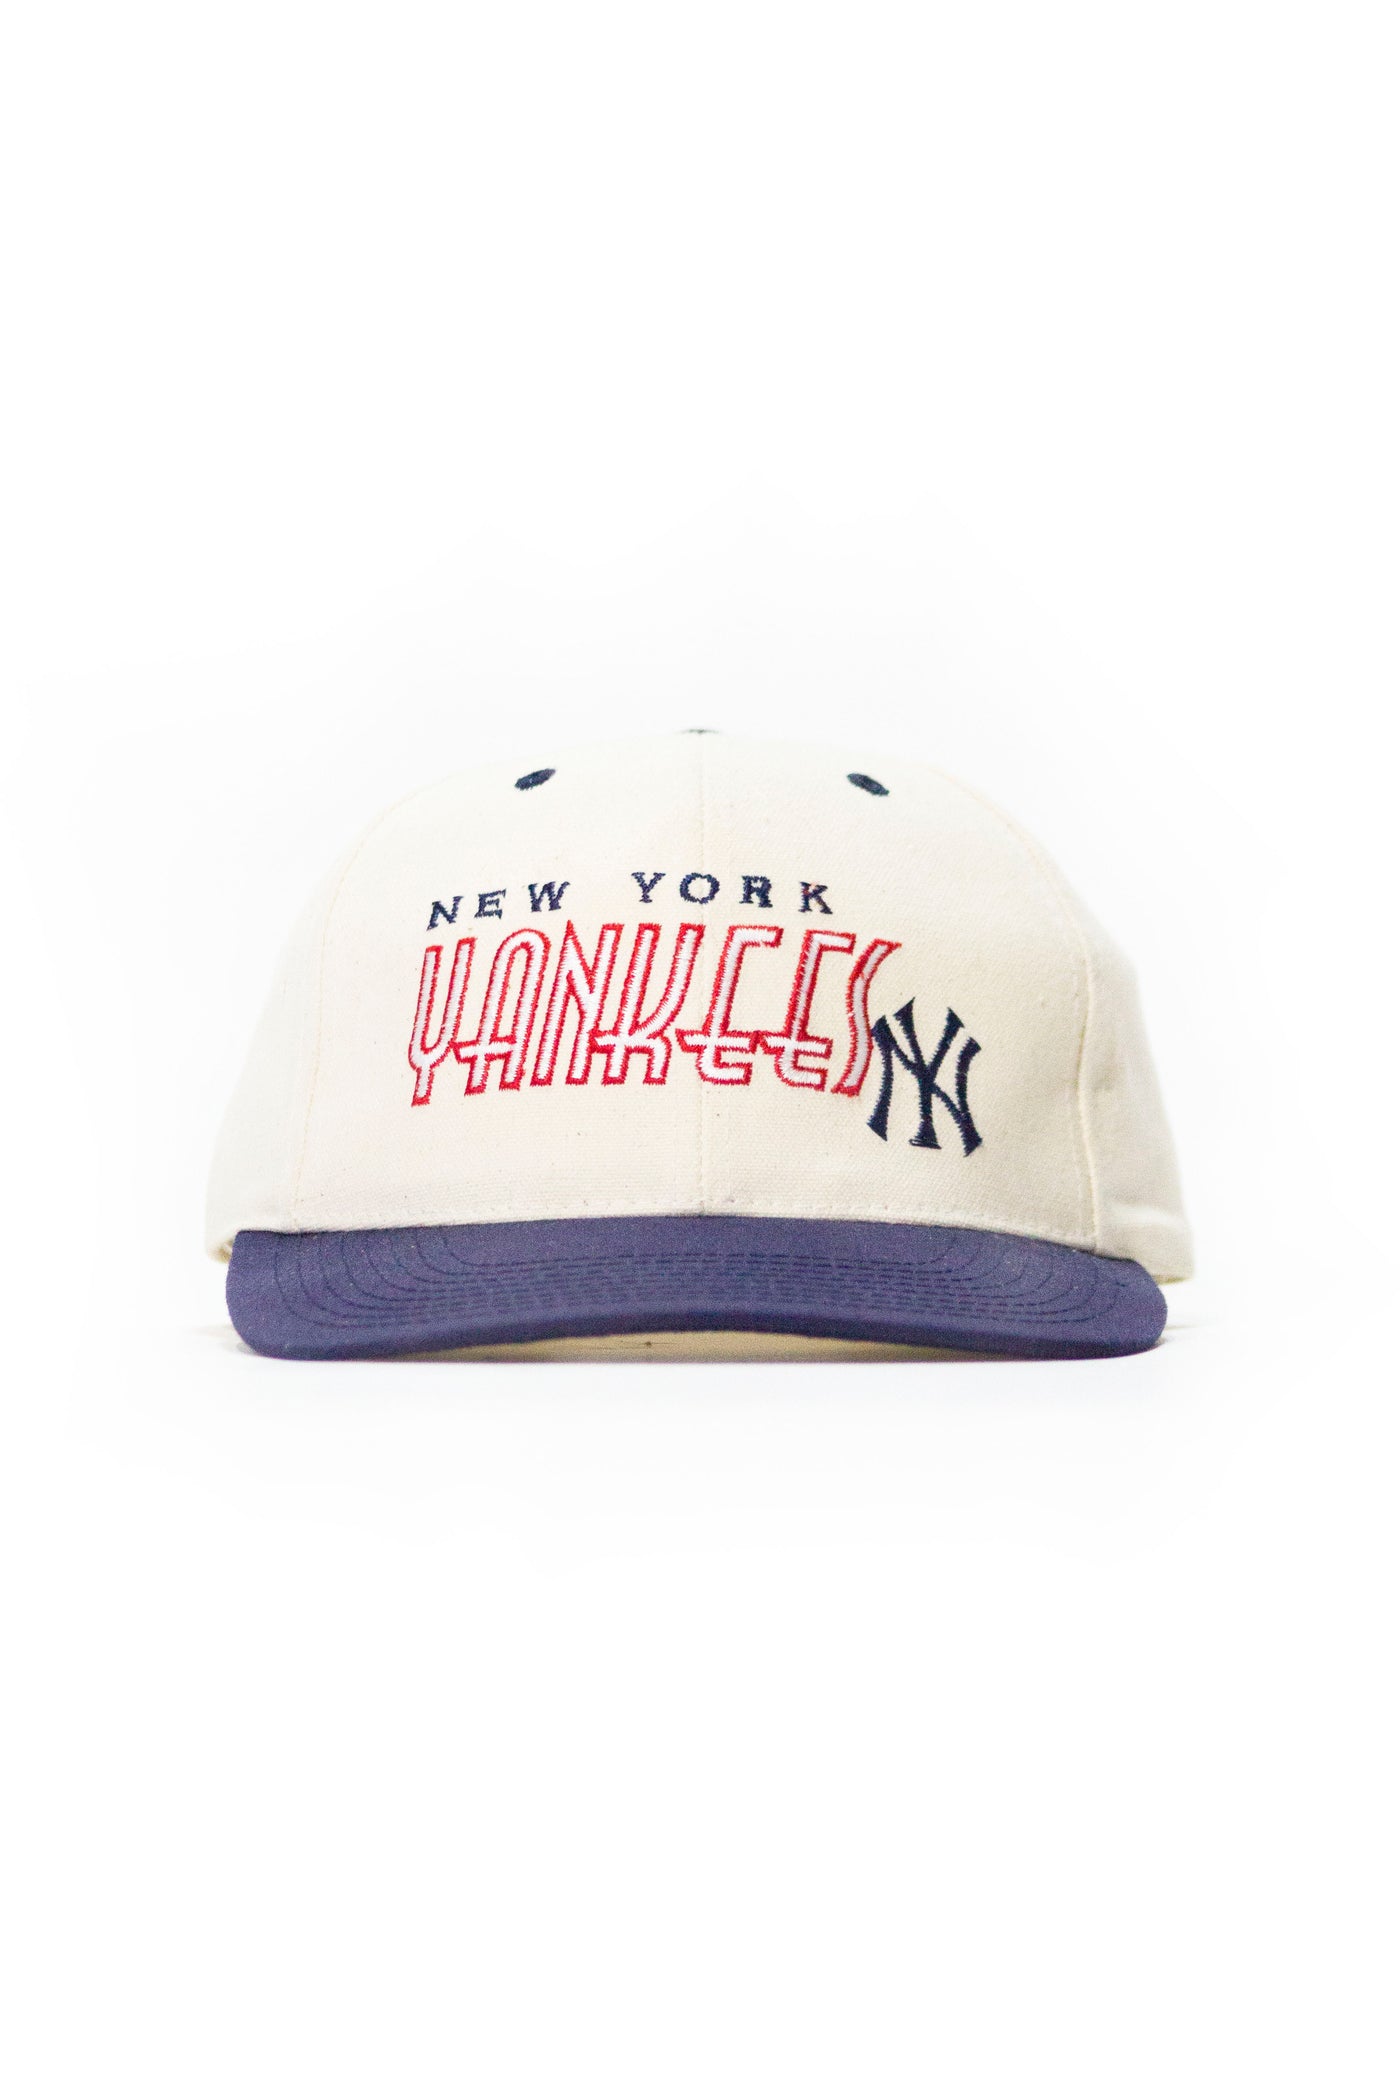 Vintage 90s New York Yankees Strapback Hat